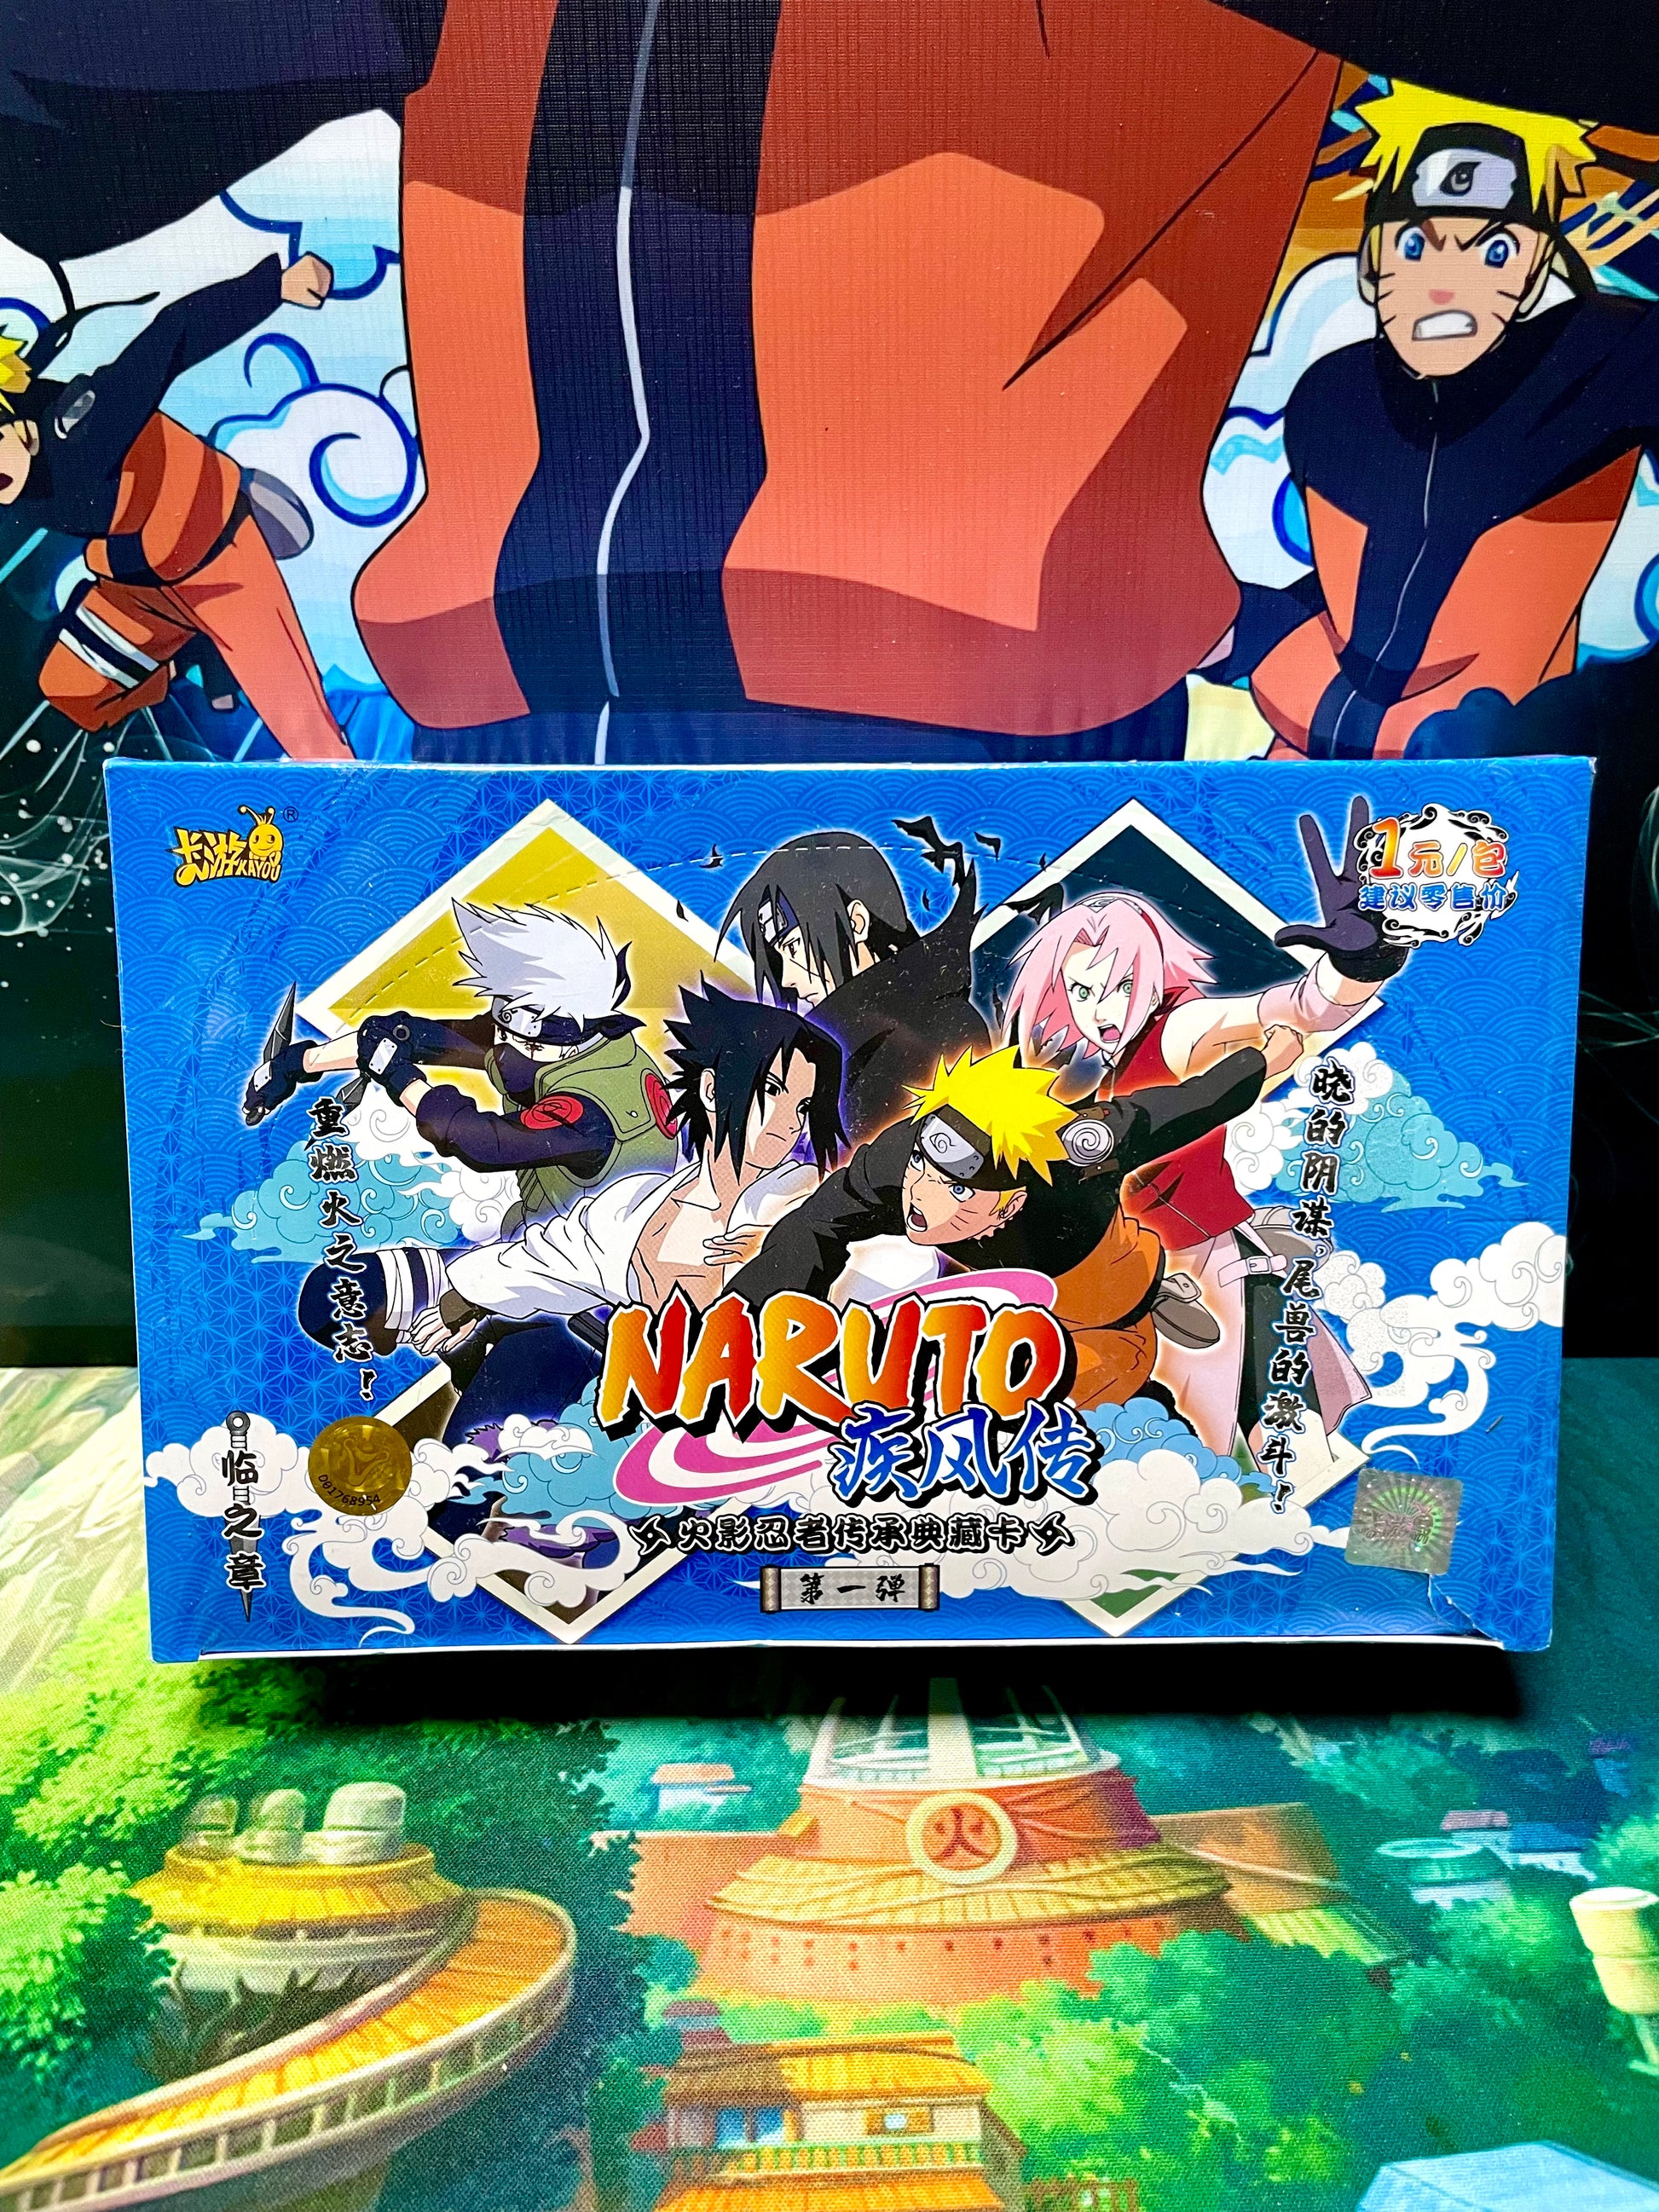 Classeur Naruto KAYOU 9 emplacements + 4 Cartes Promo – KamiWorld